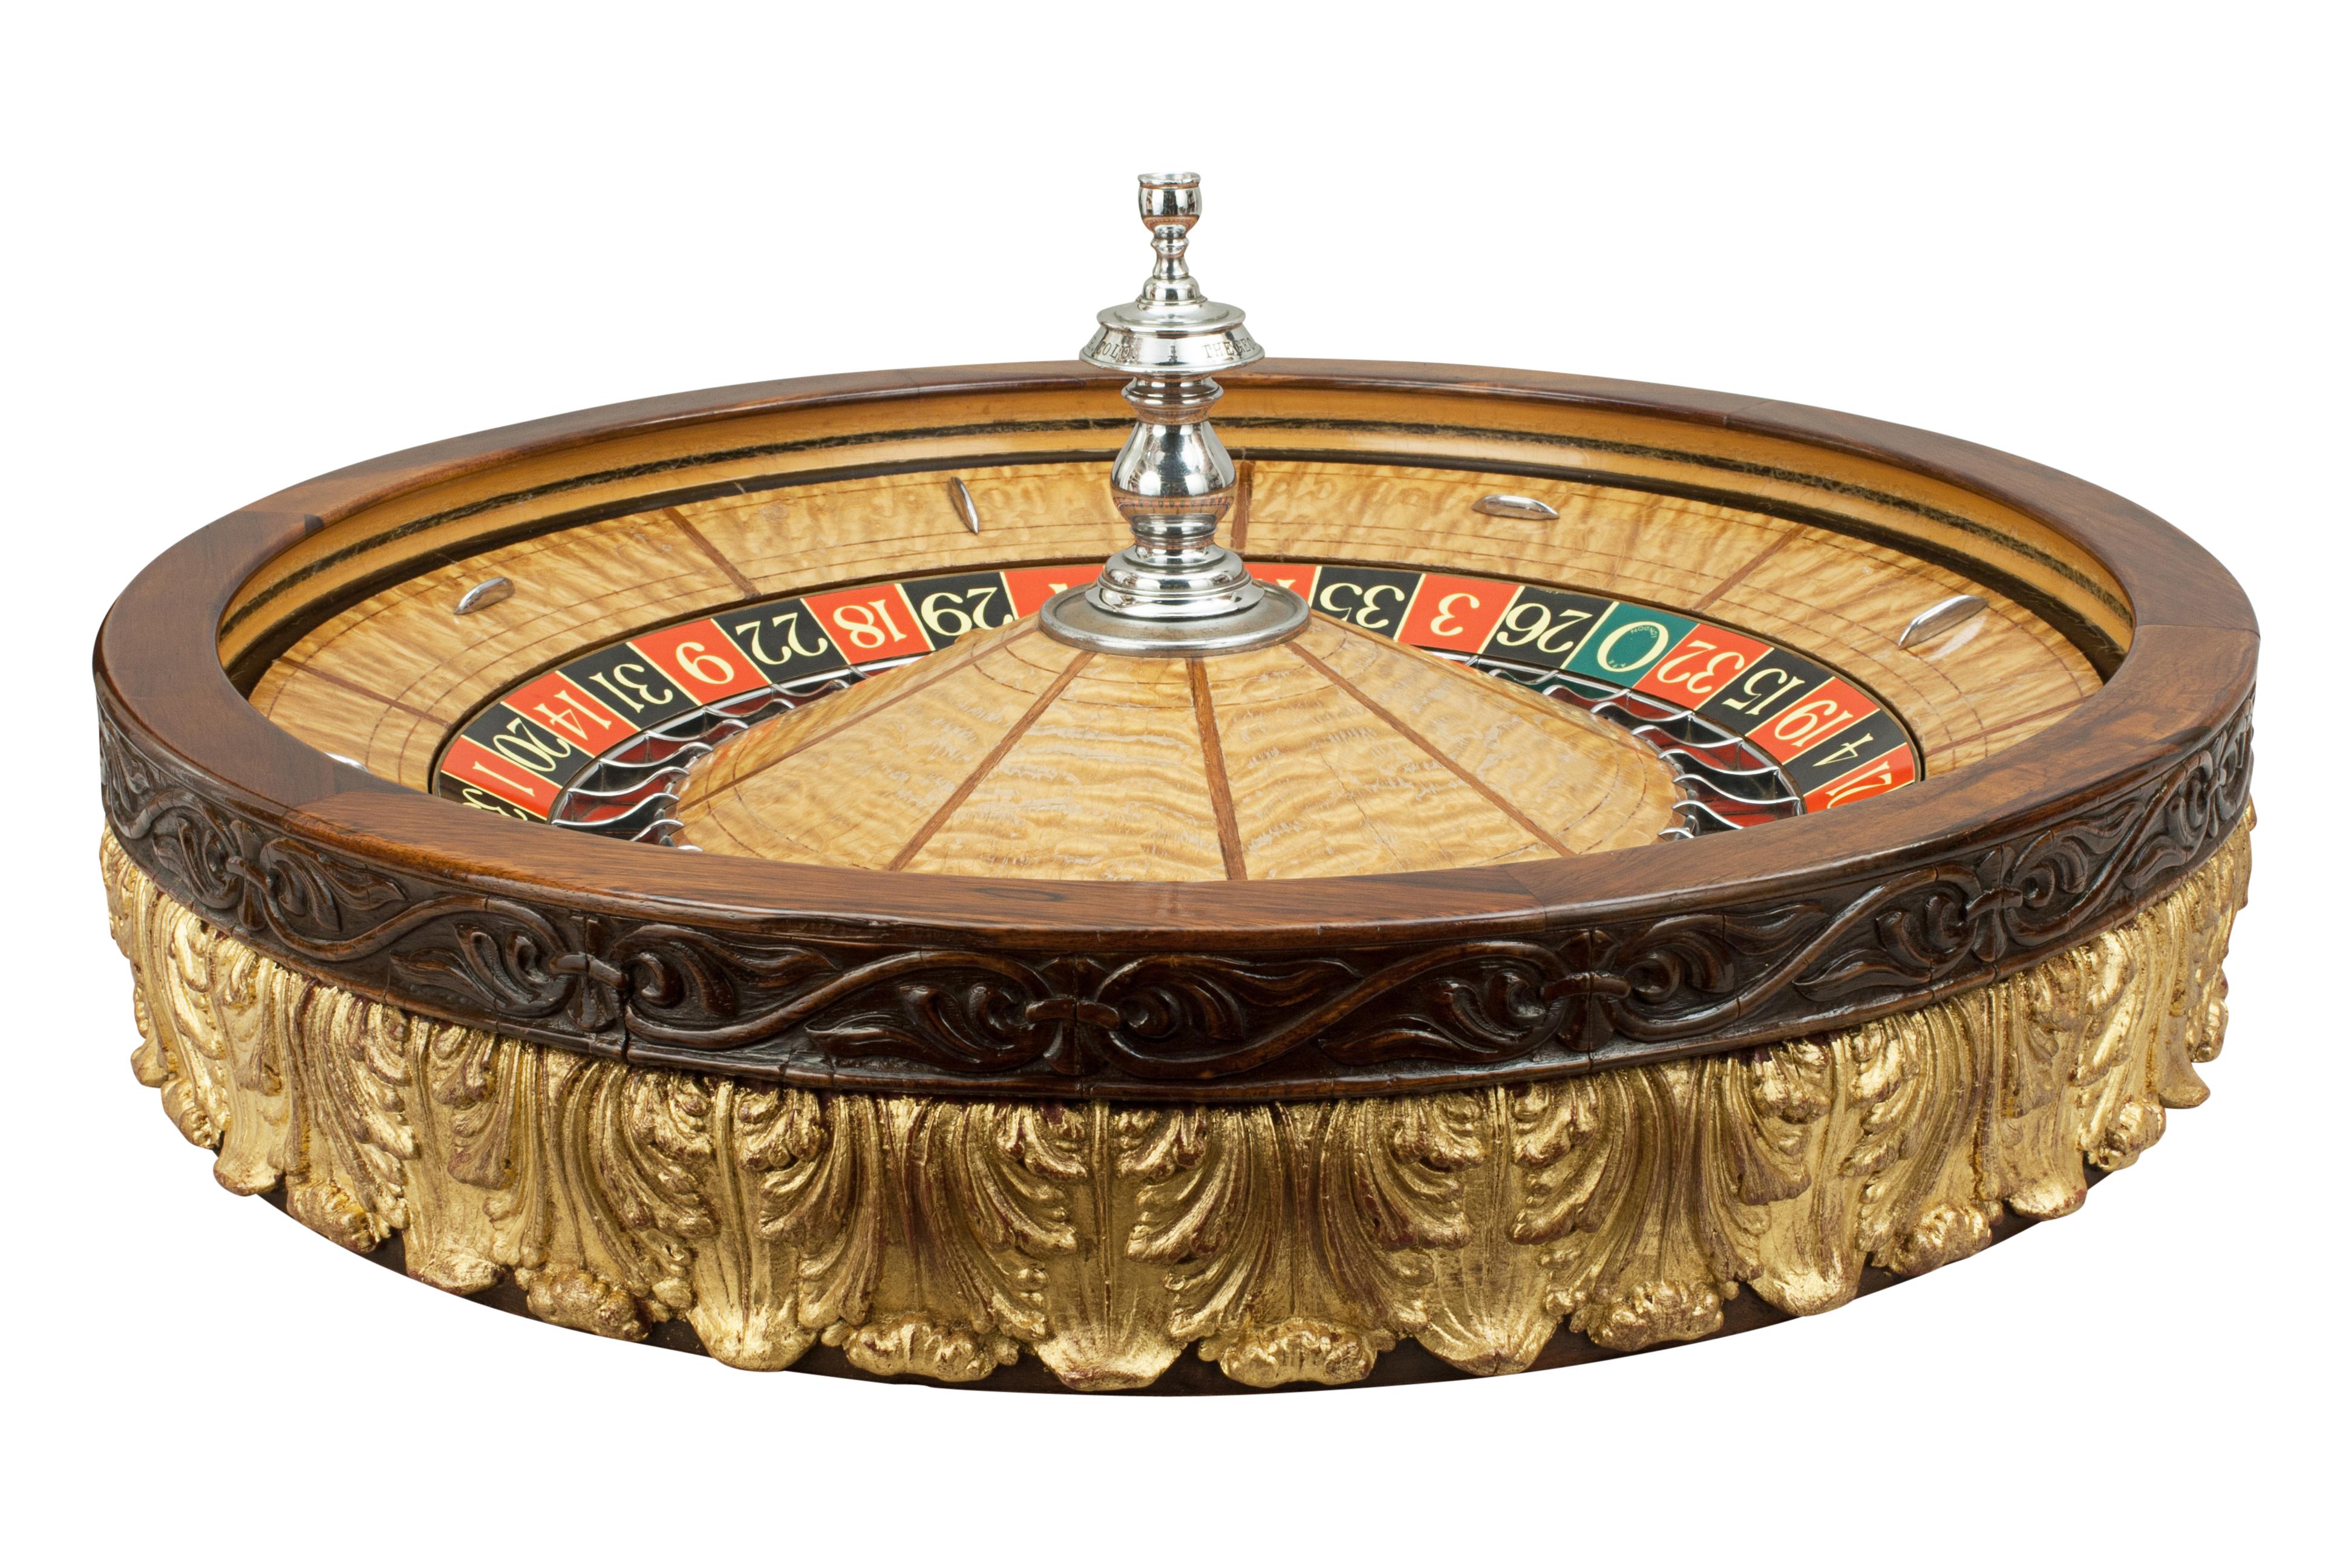 Antique Casino Roulette Wheel, George Mason Co. Denver Colorado 9